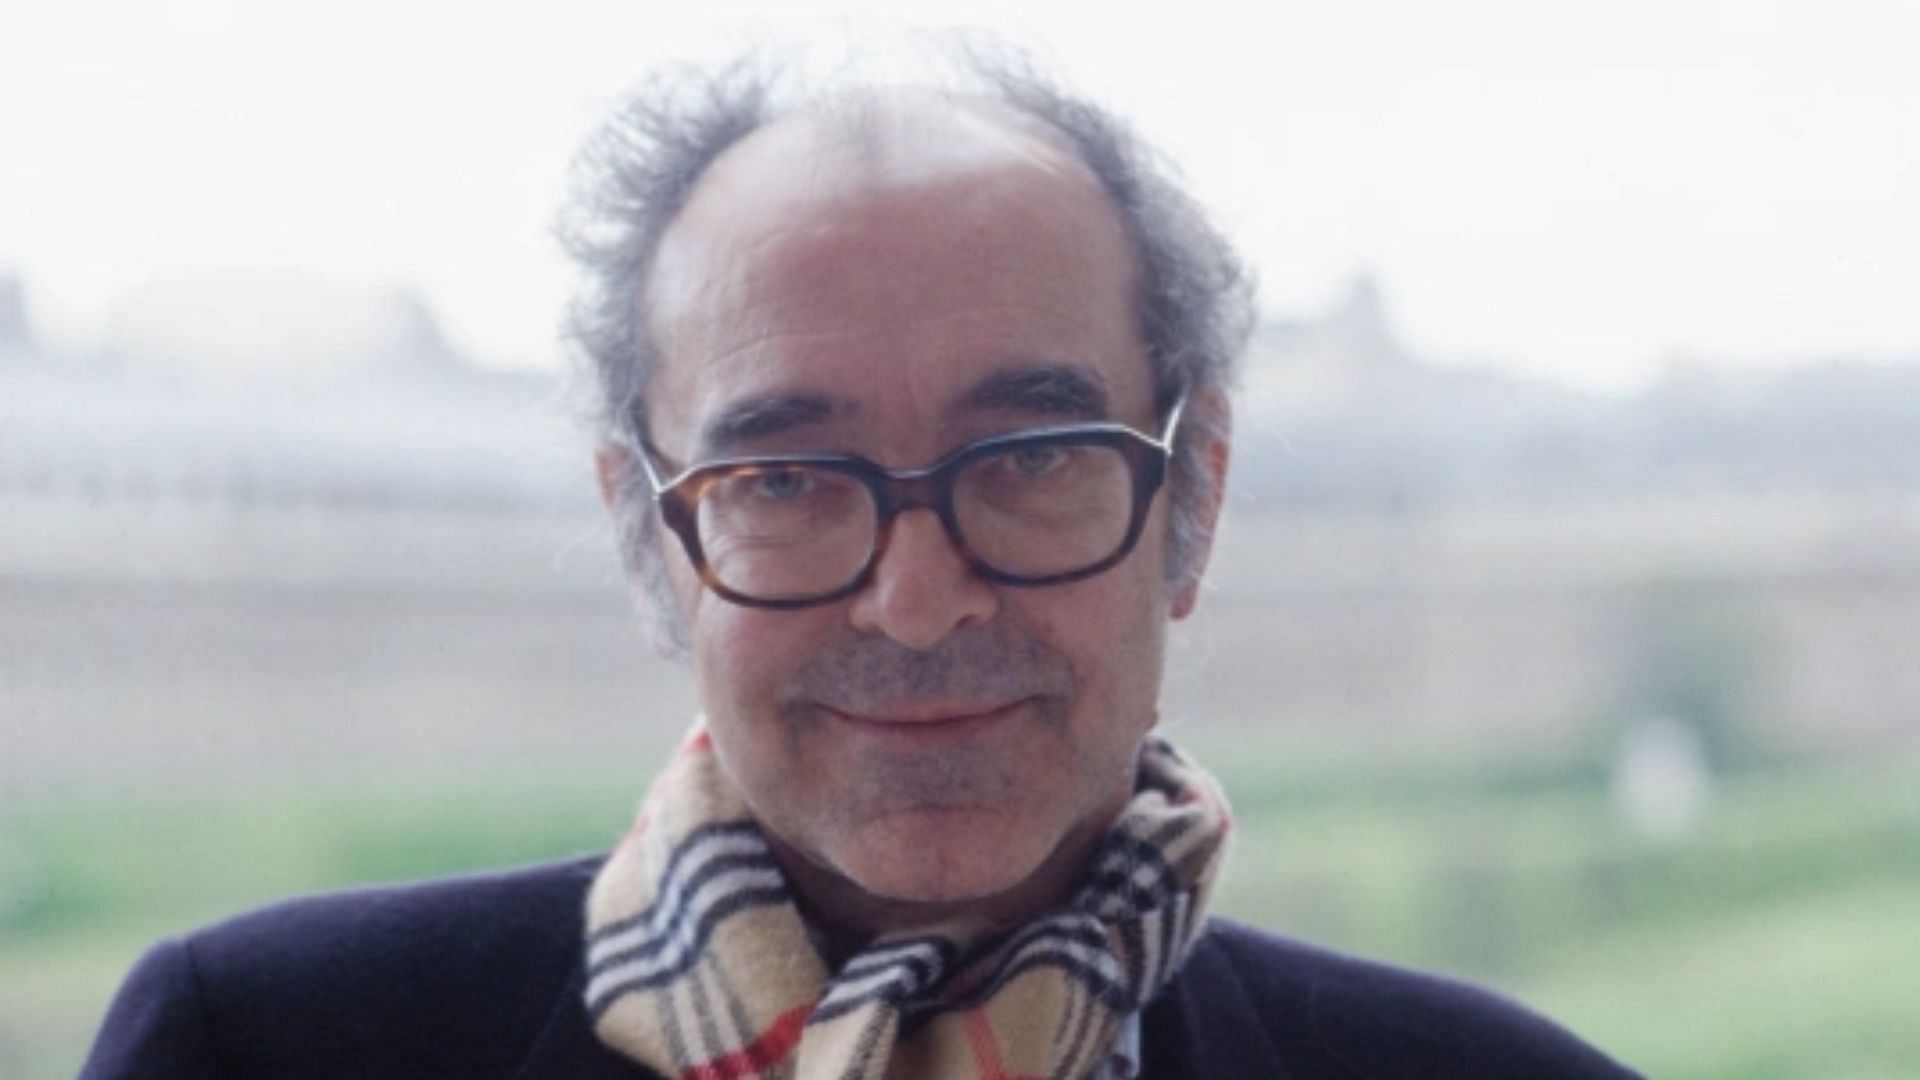 Jean-Luc Godard passes away. (Image via Eric Robert/Getty Images)